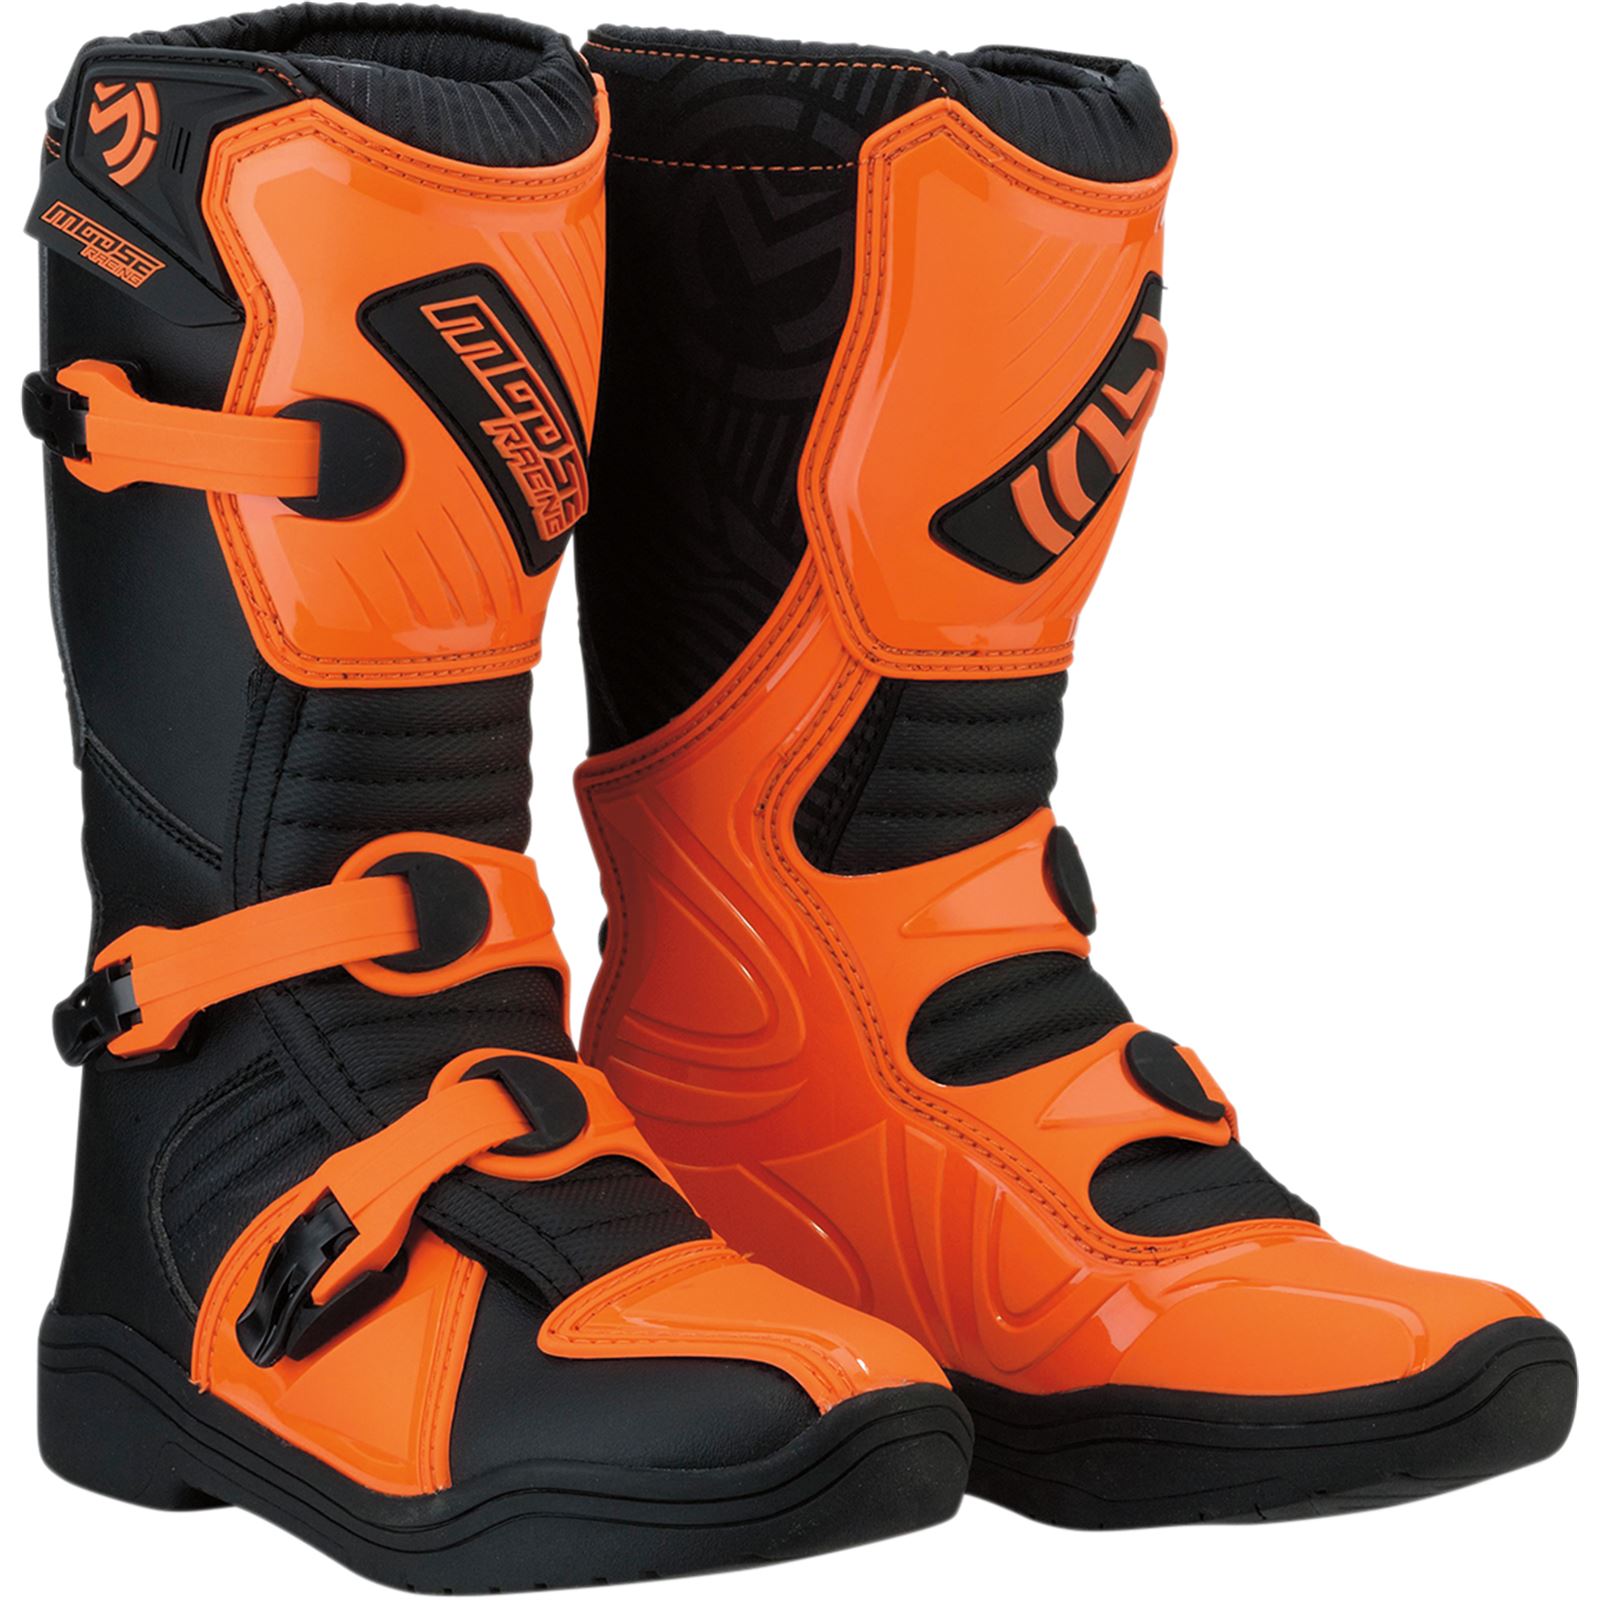 Moose Racing M1.3 Boots - Black/Orange - Size 6